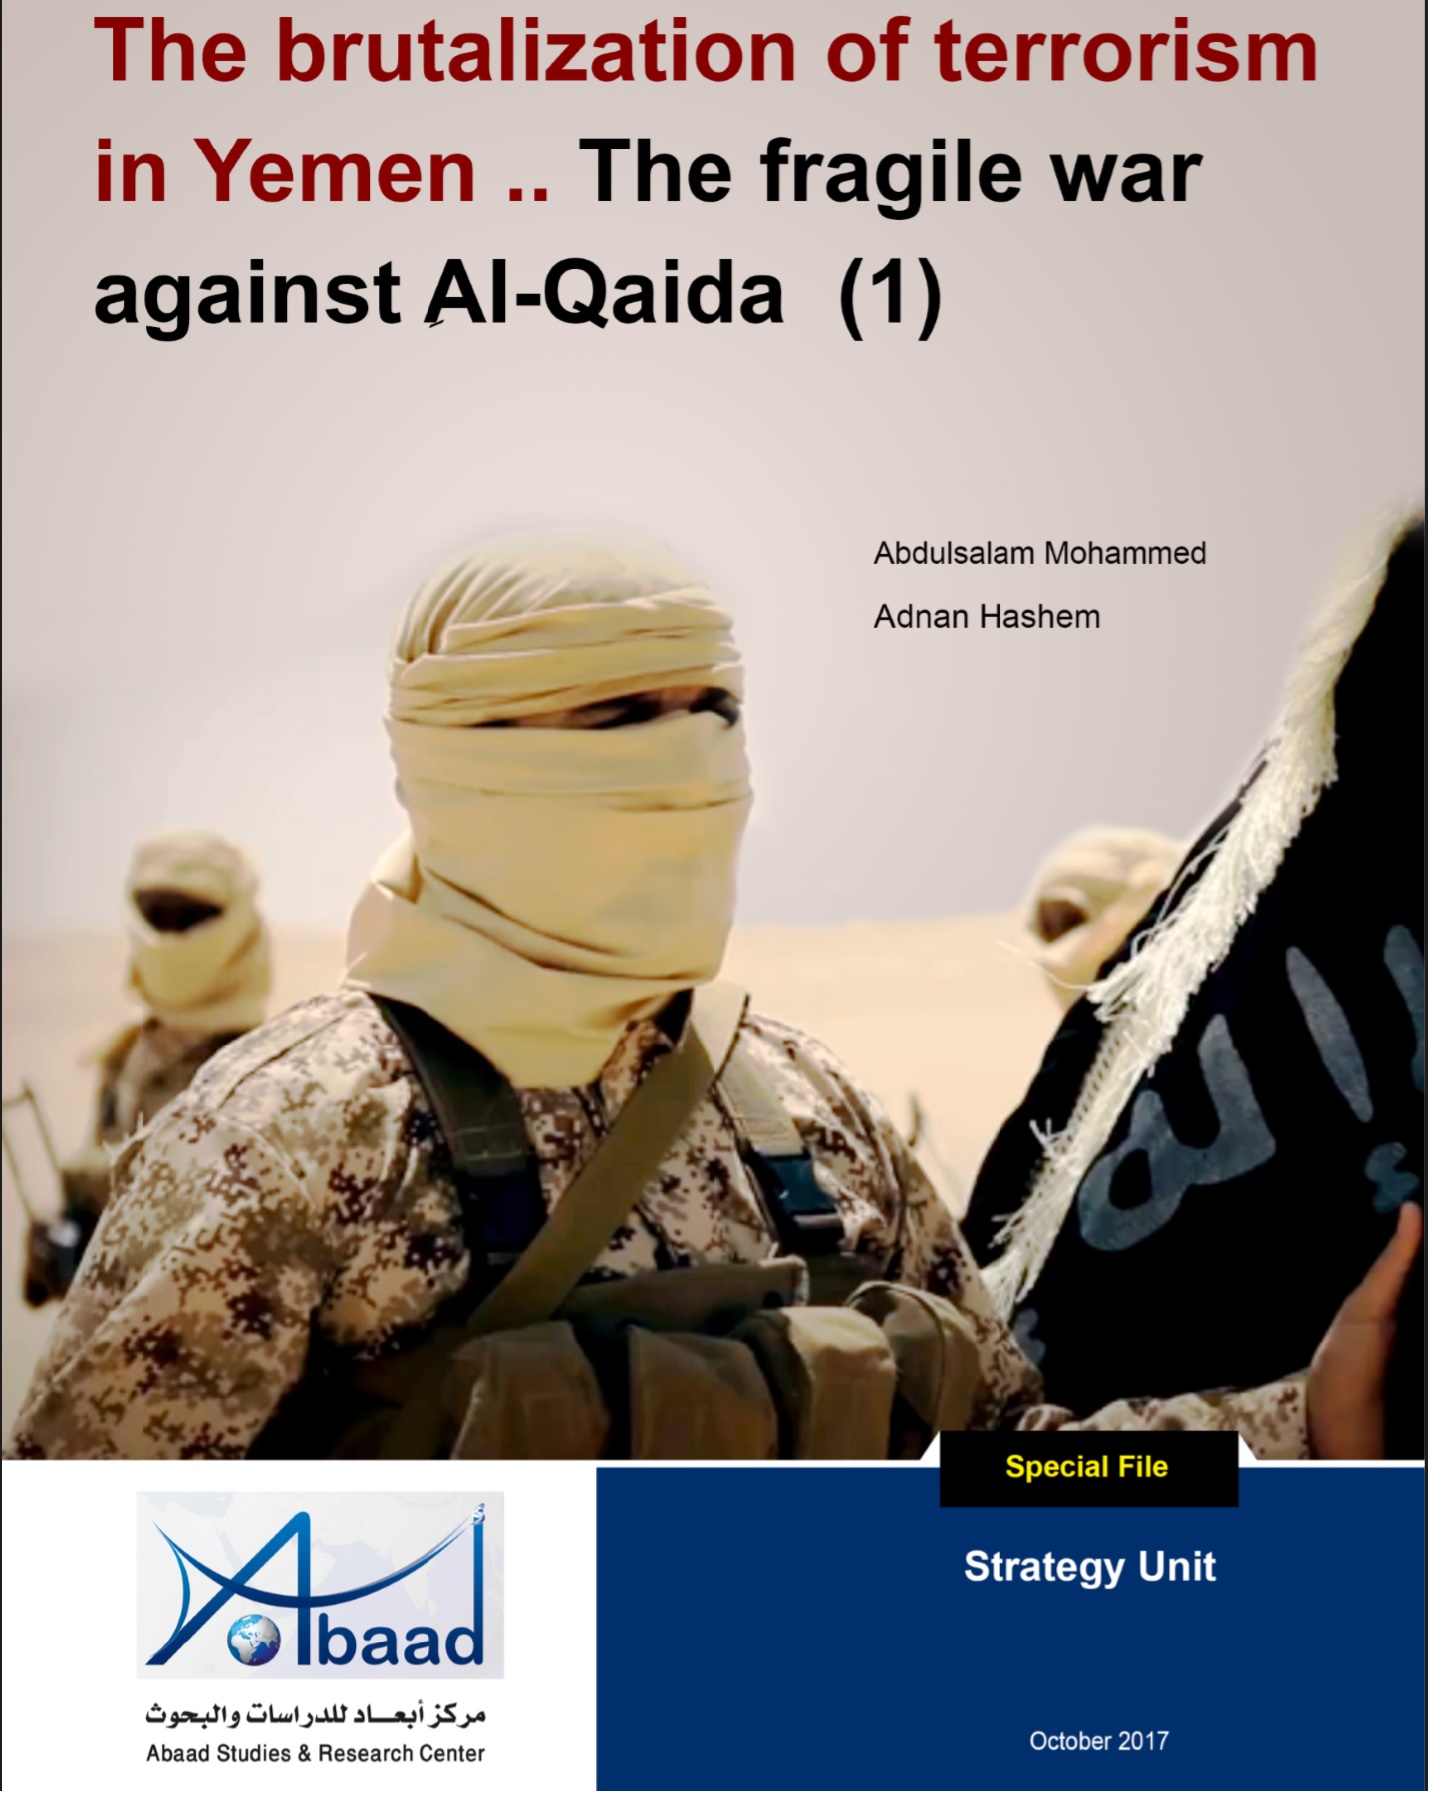  The brutalization of terrorism in Yemen..The fragile war against Al-Qaeda-1